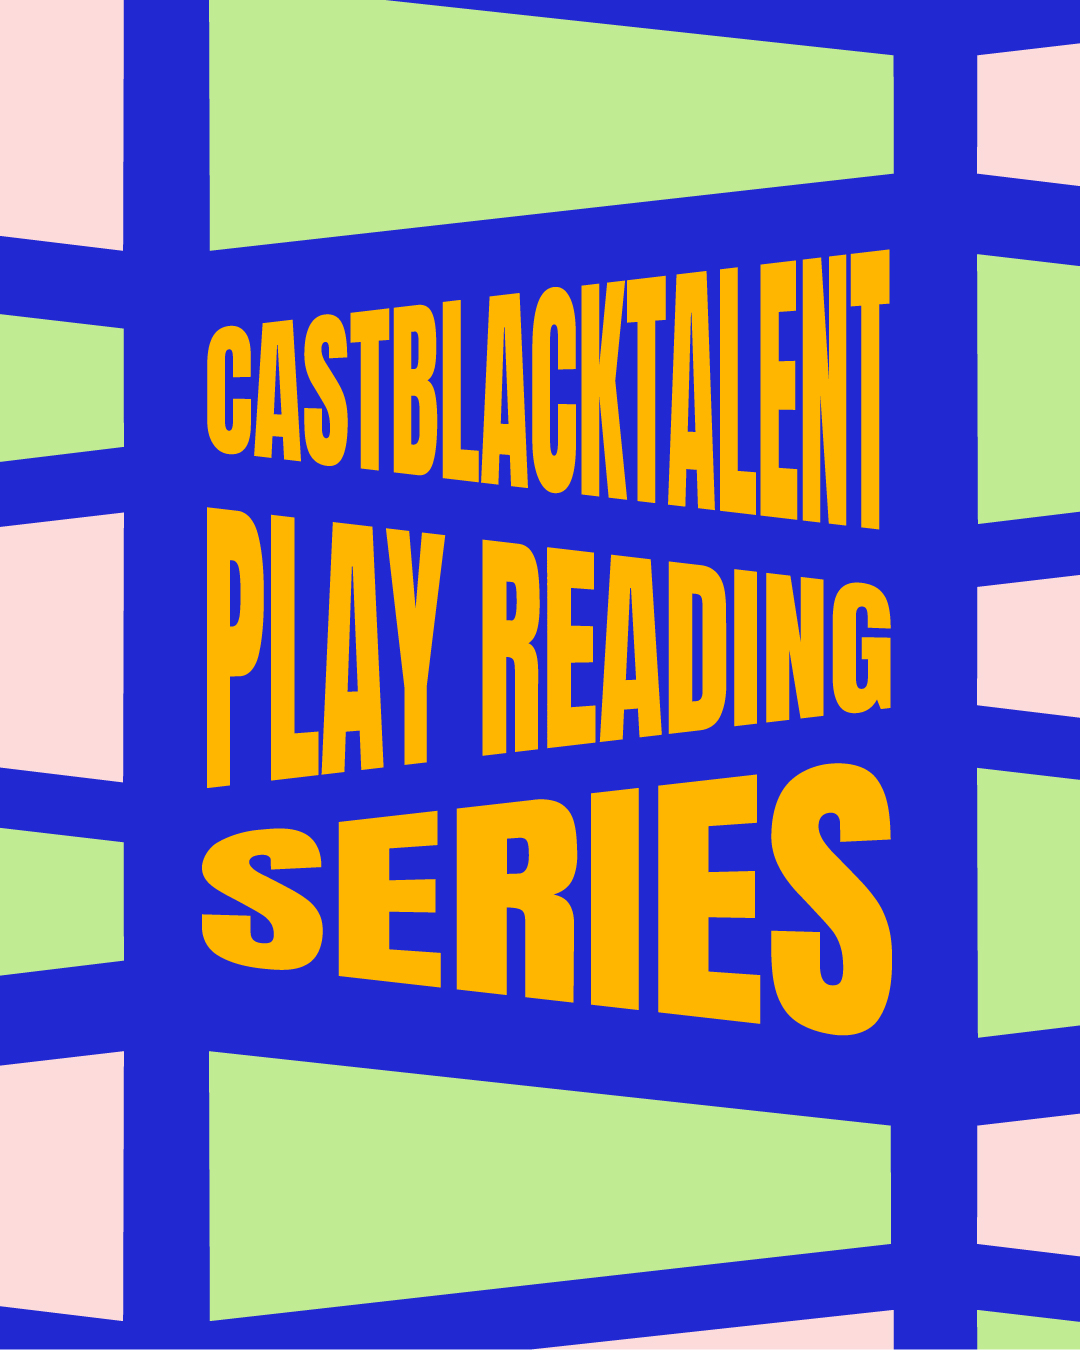 Cast Black Talent Virtual Reading Series (2020) постер